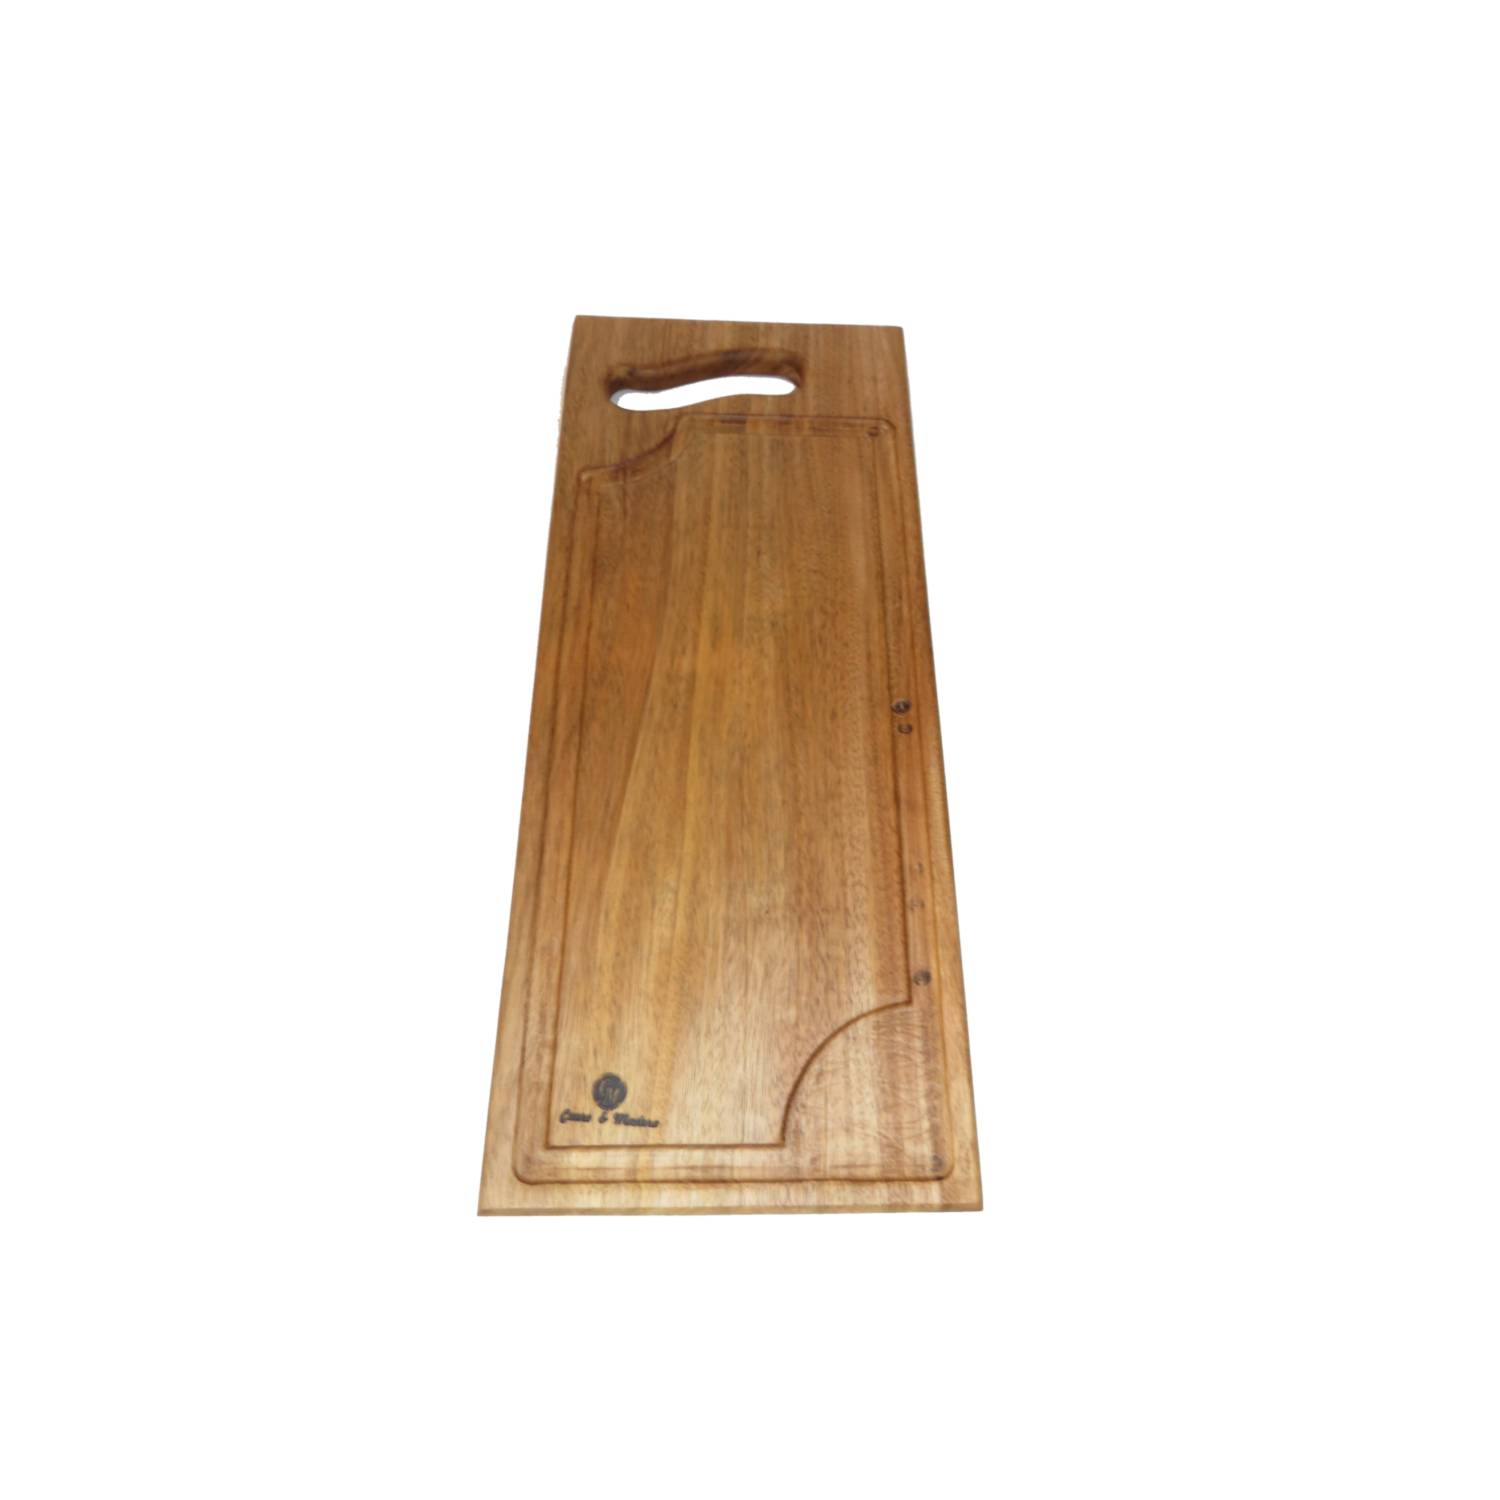 GENERICO Tabla para picar de madera nativa 50x25cm